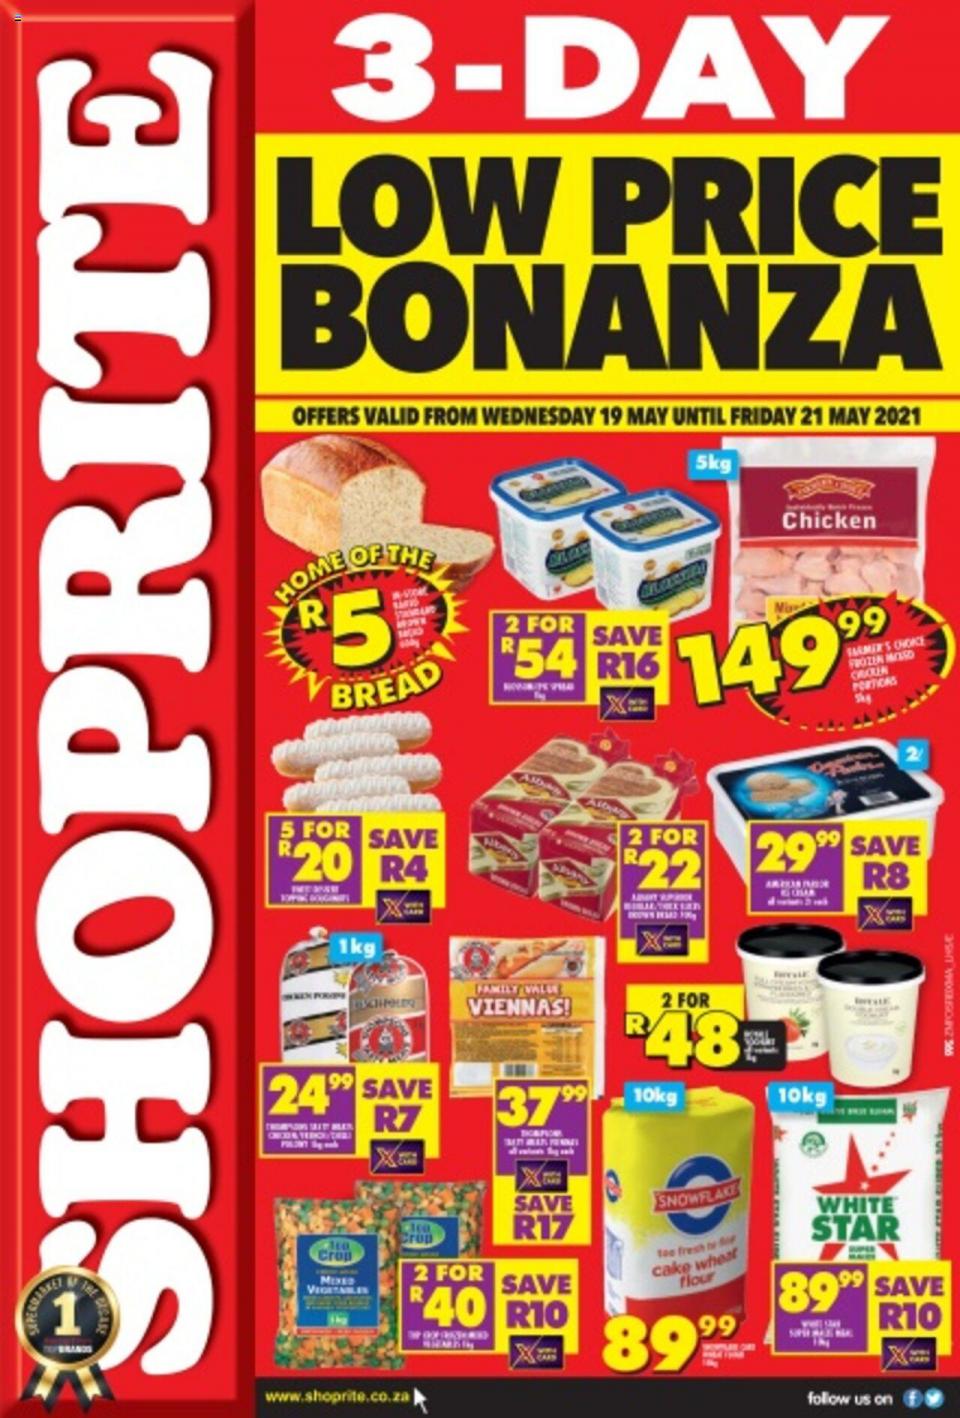 Shoprite Specials 3-Day Low Price Bonanza 19 – 21 May 2021